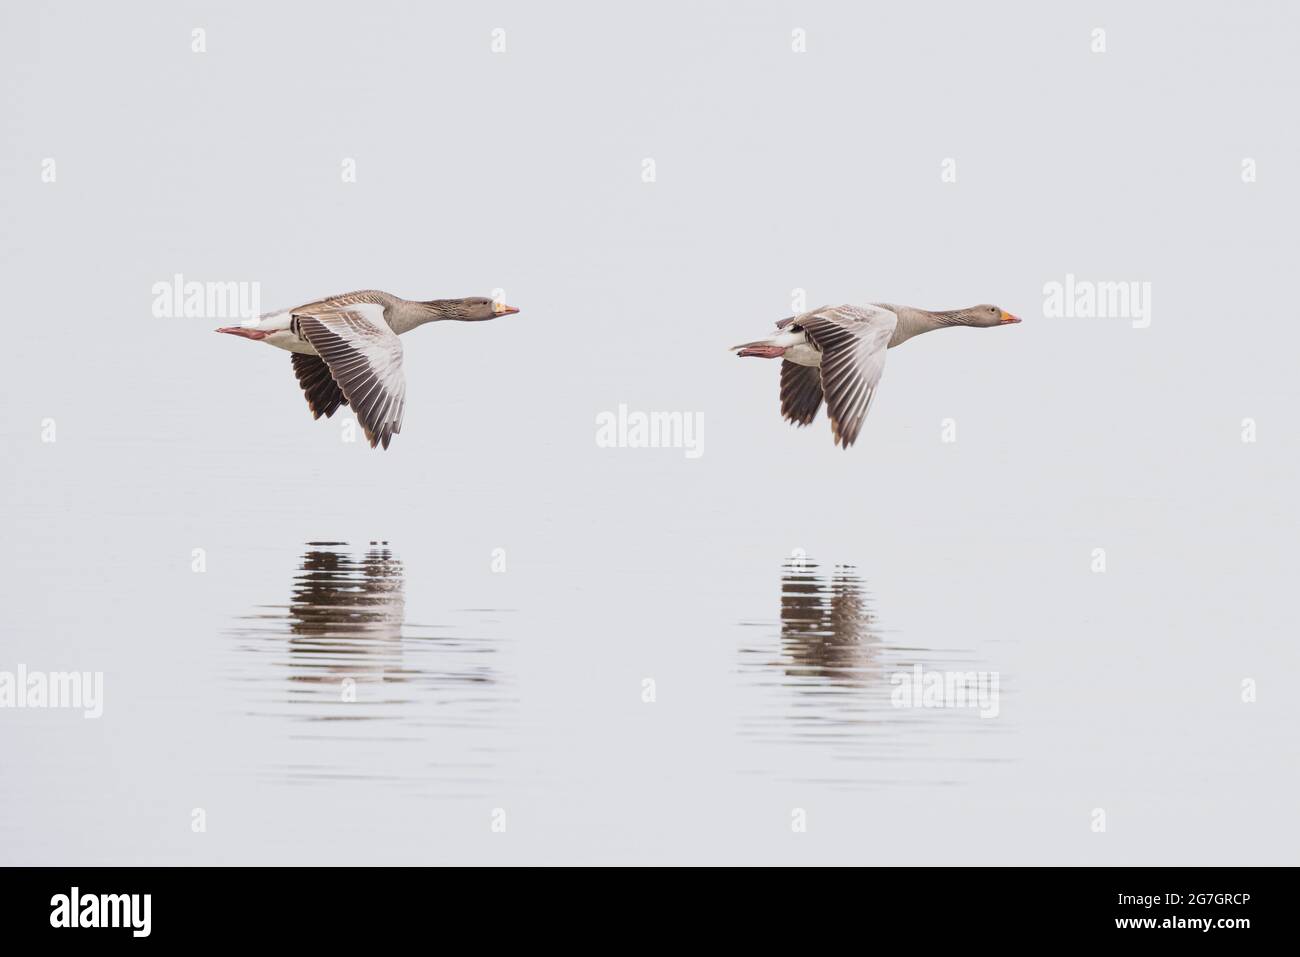 Ganso de graylag (Anser anser), dos gansos de graylag en vuelo sobre un lago, con imagen de espejo, imagen de High-Key, Alemania, Baviera Foto de stock